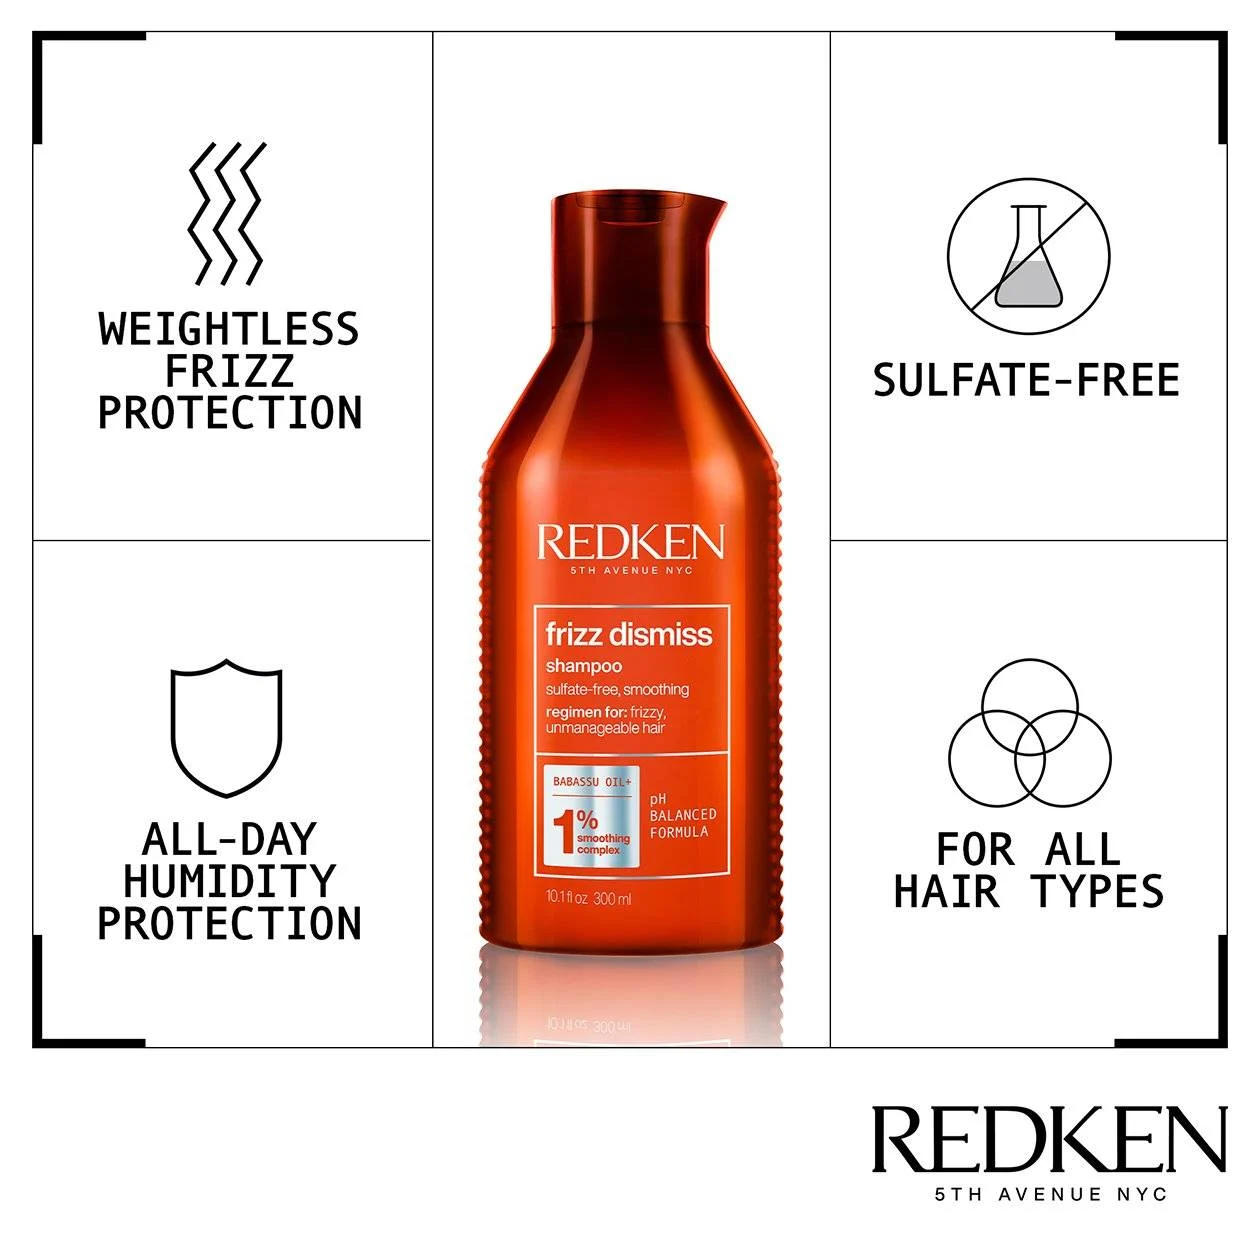 redken-2020-na-frizz-dismiss-shampoo-benefits-template